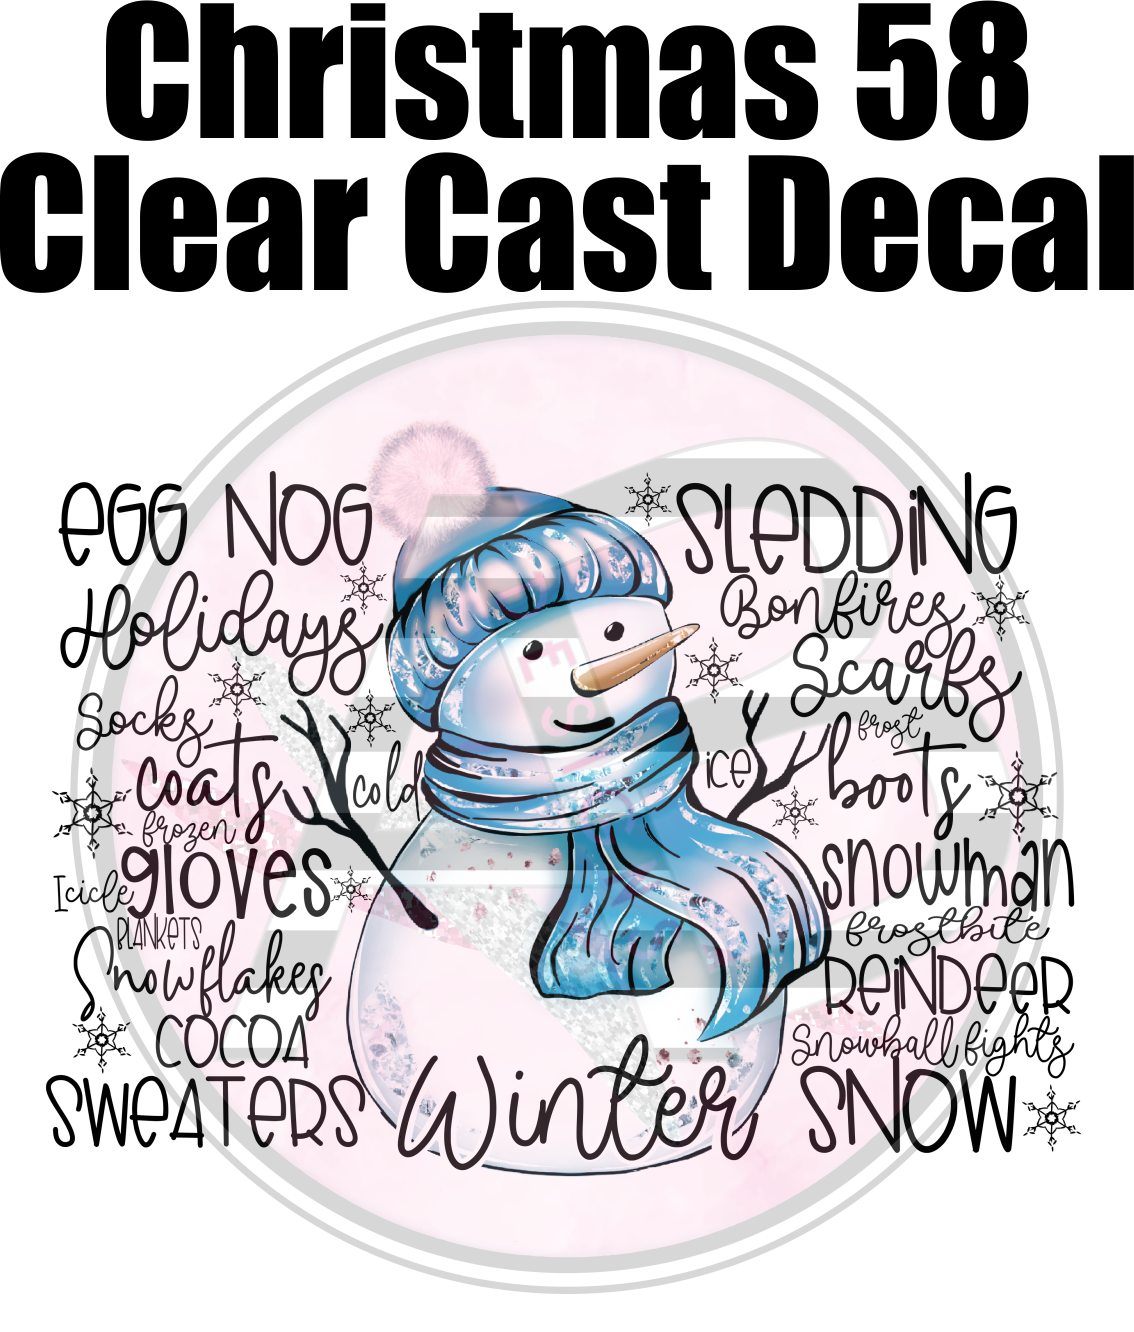 Christmas 58 - Clear Cast Decal